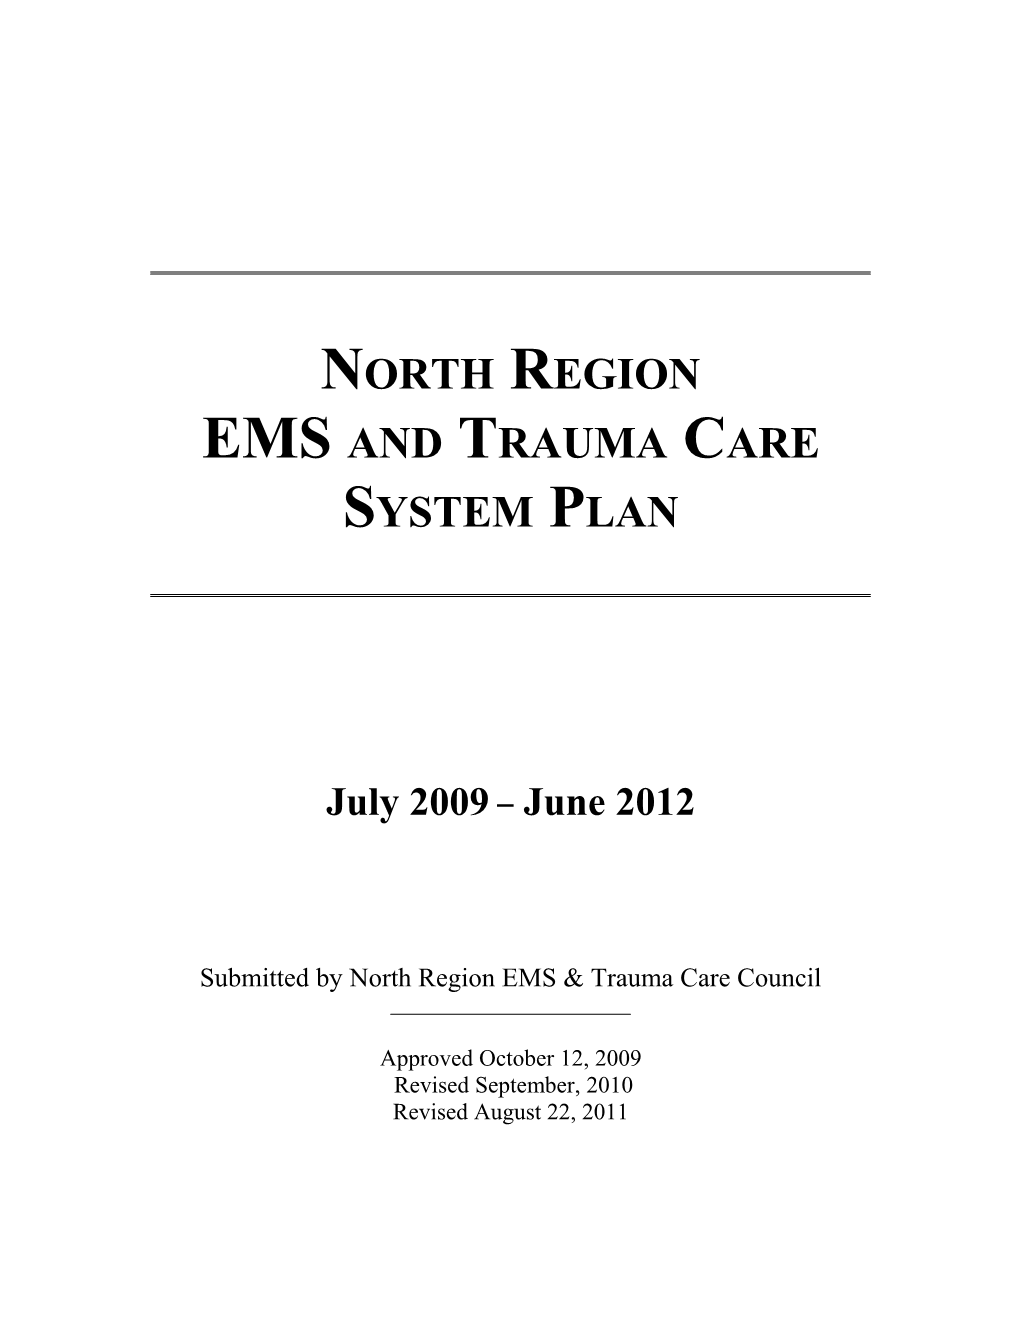 North Region EMS and Trauma Care Plan - 2009-2012